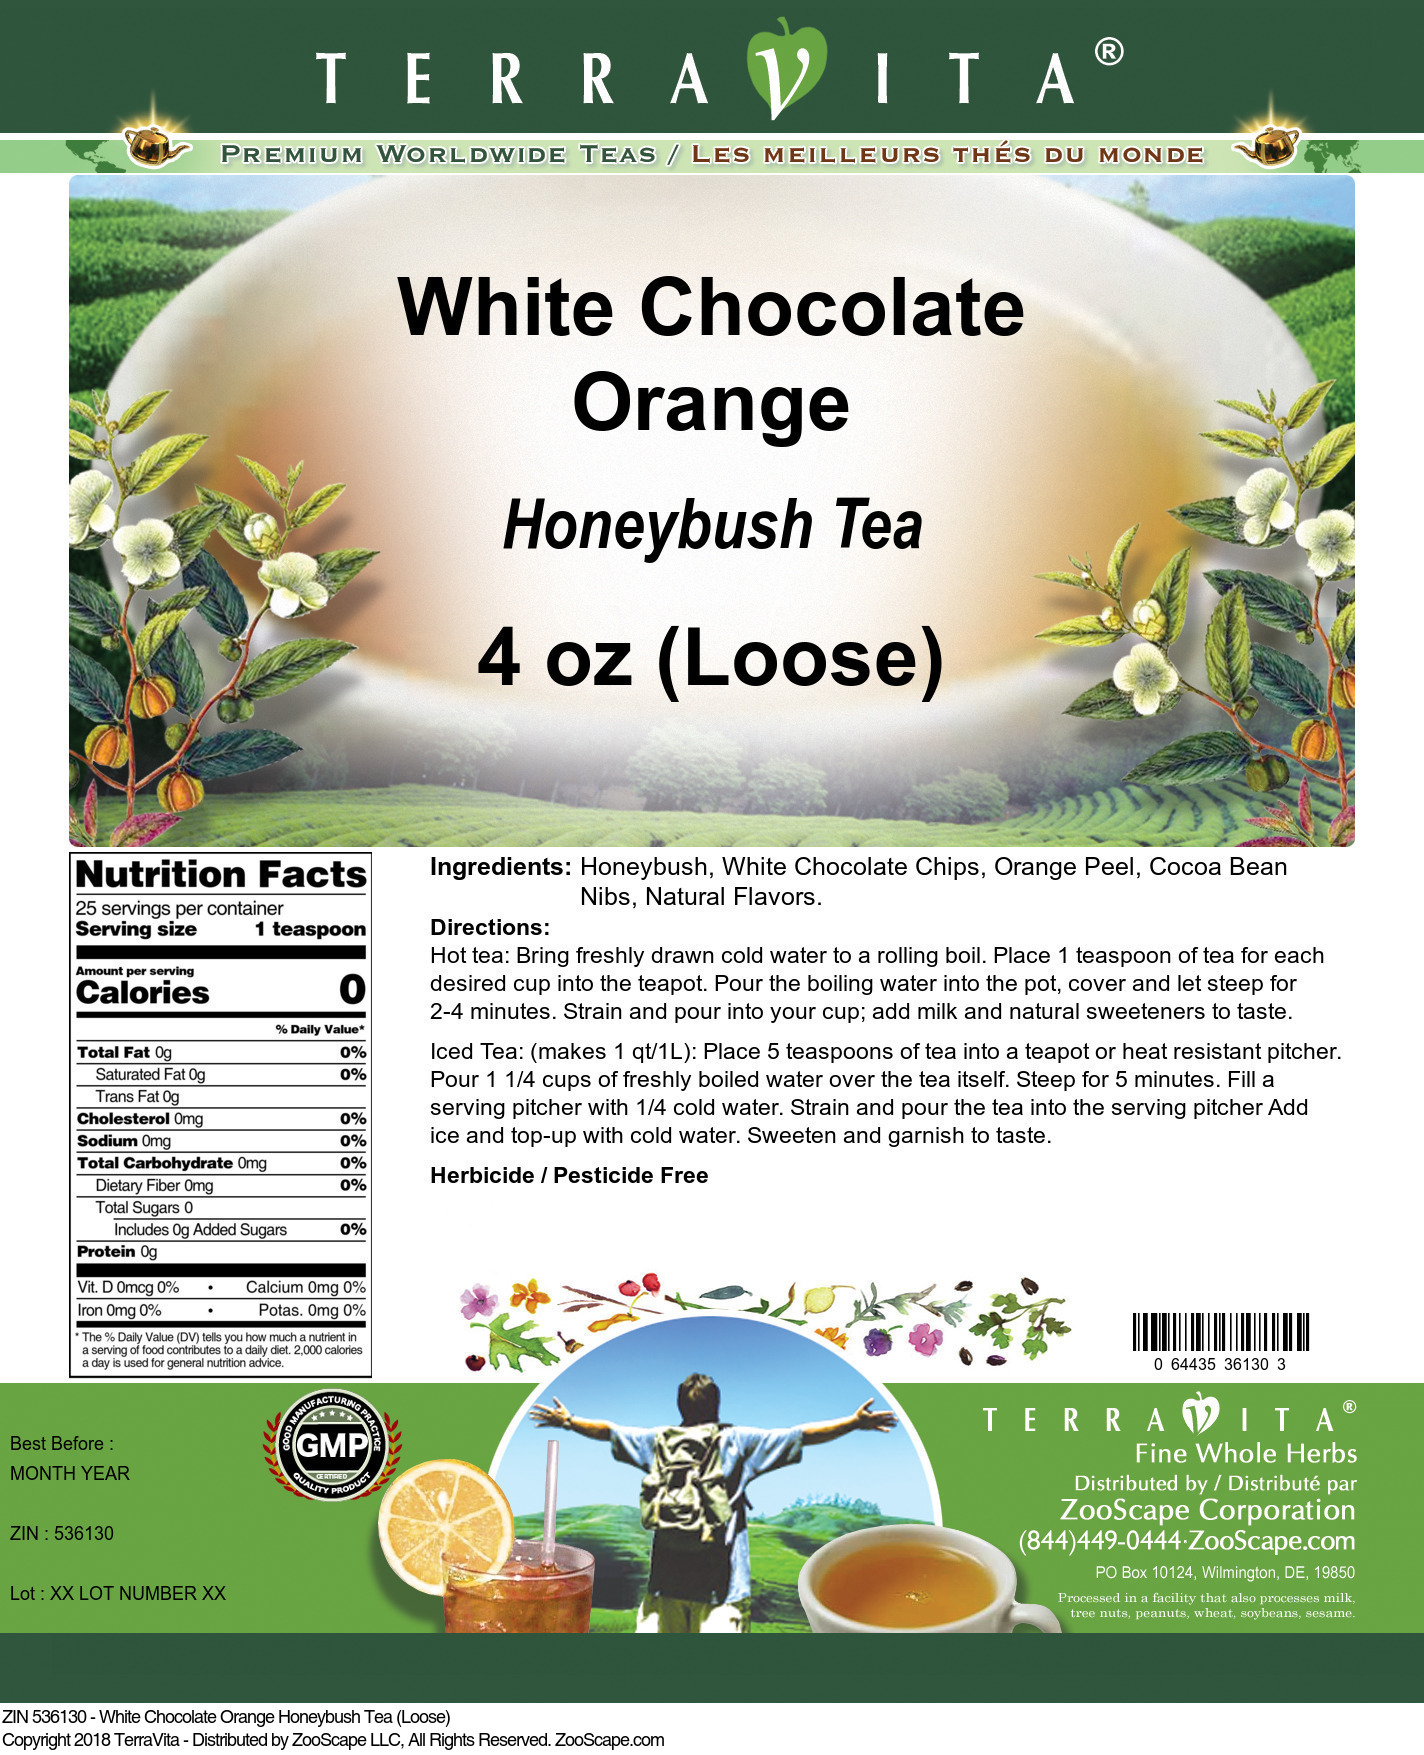 White Chocolate Orange Honeybush Tea (Loose) - Label